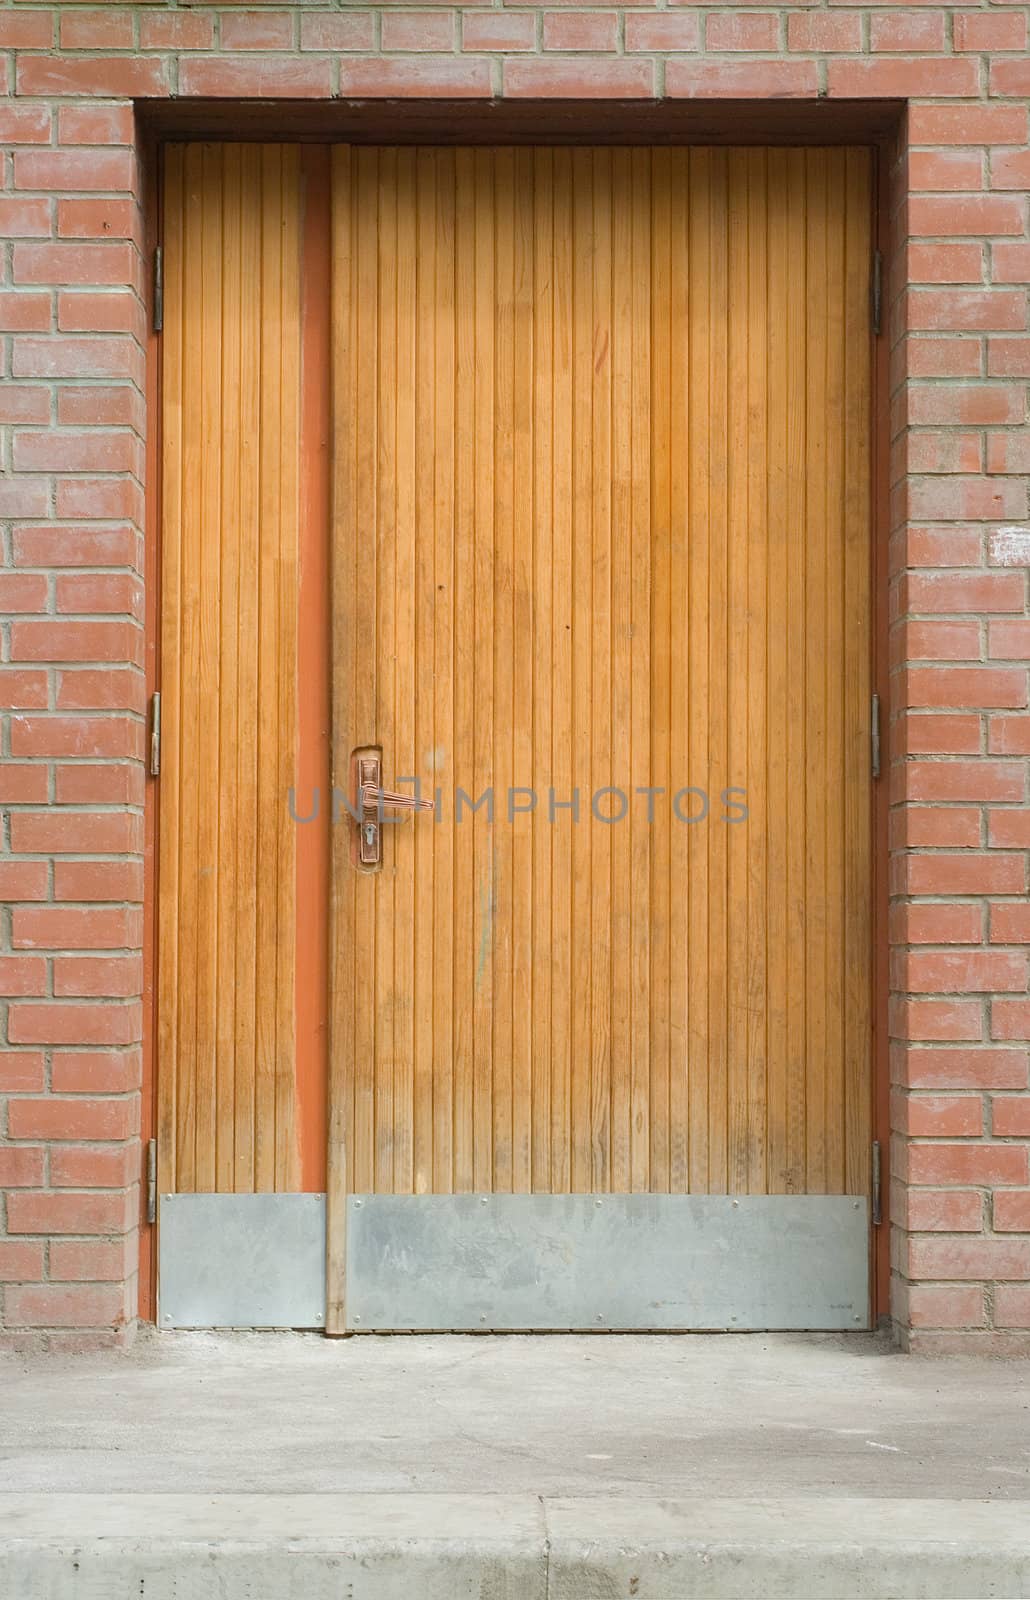 locked old wooden door in a wall of red bricks